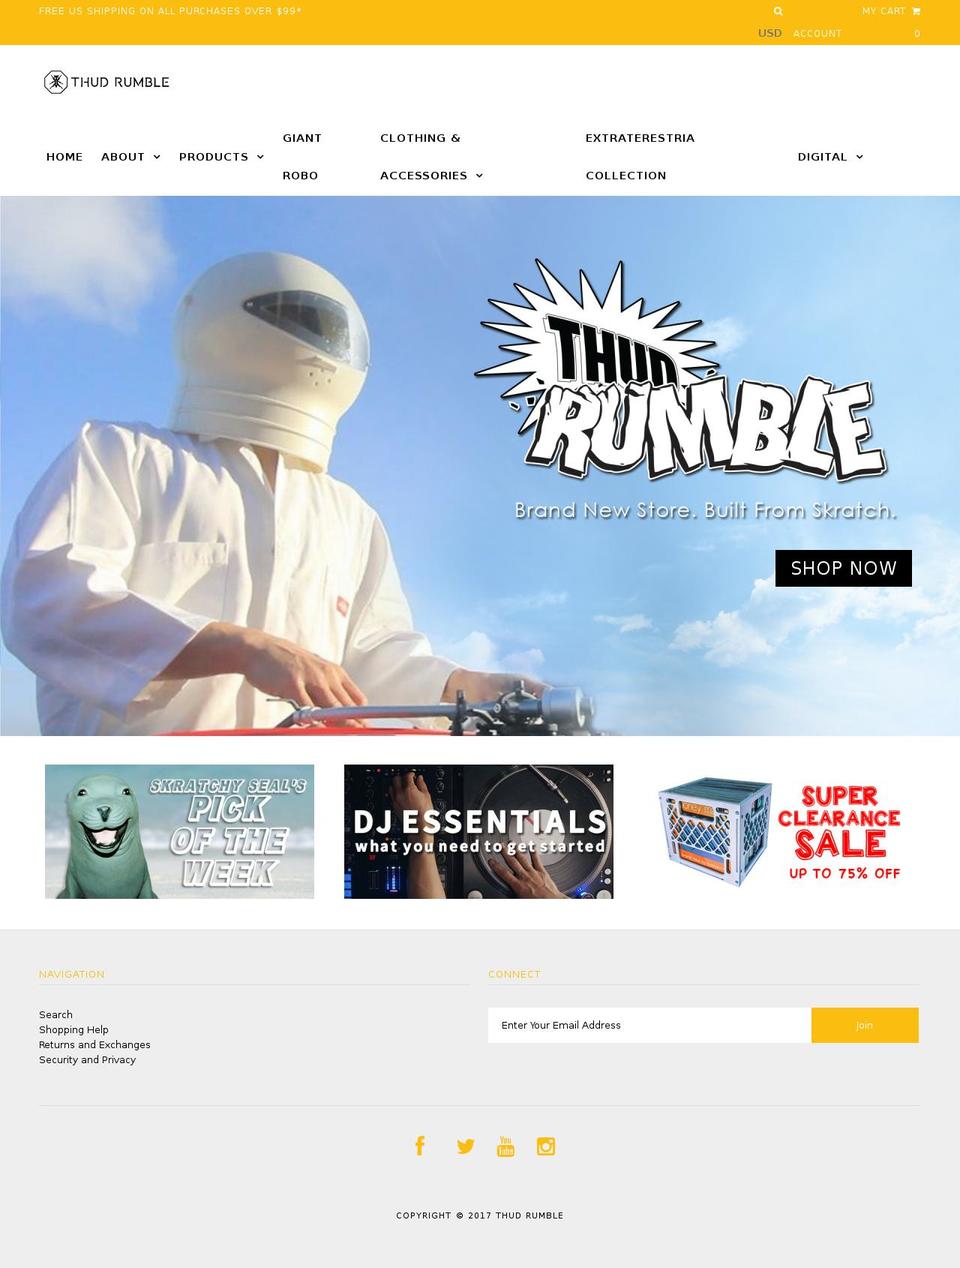 thudrumble.com shopify website screenshot